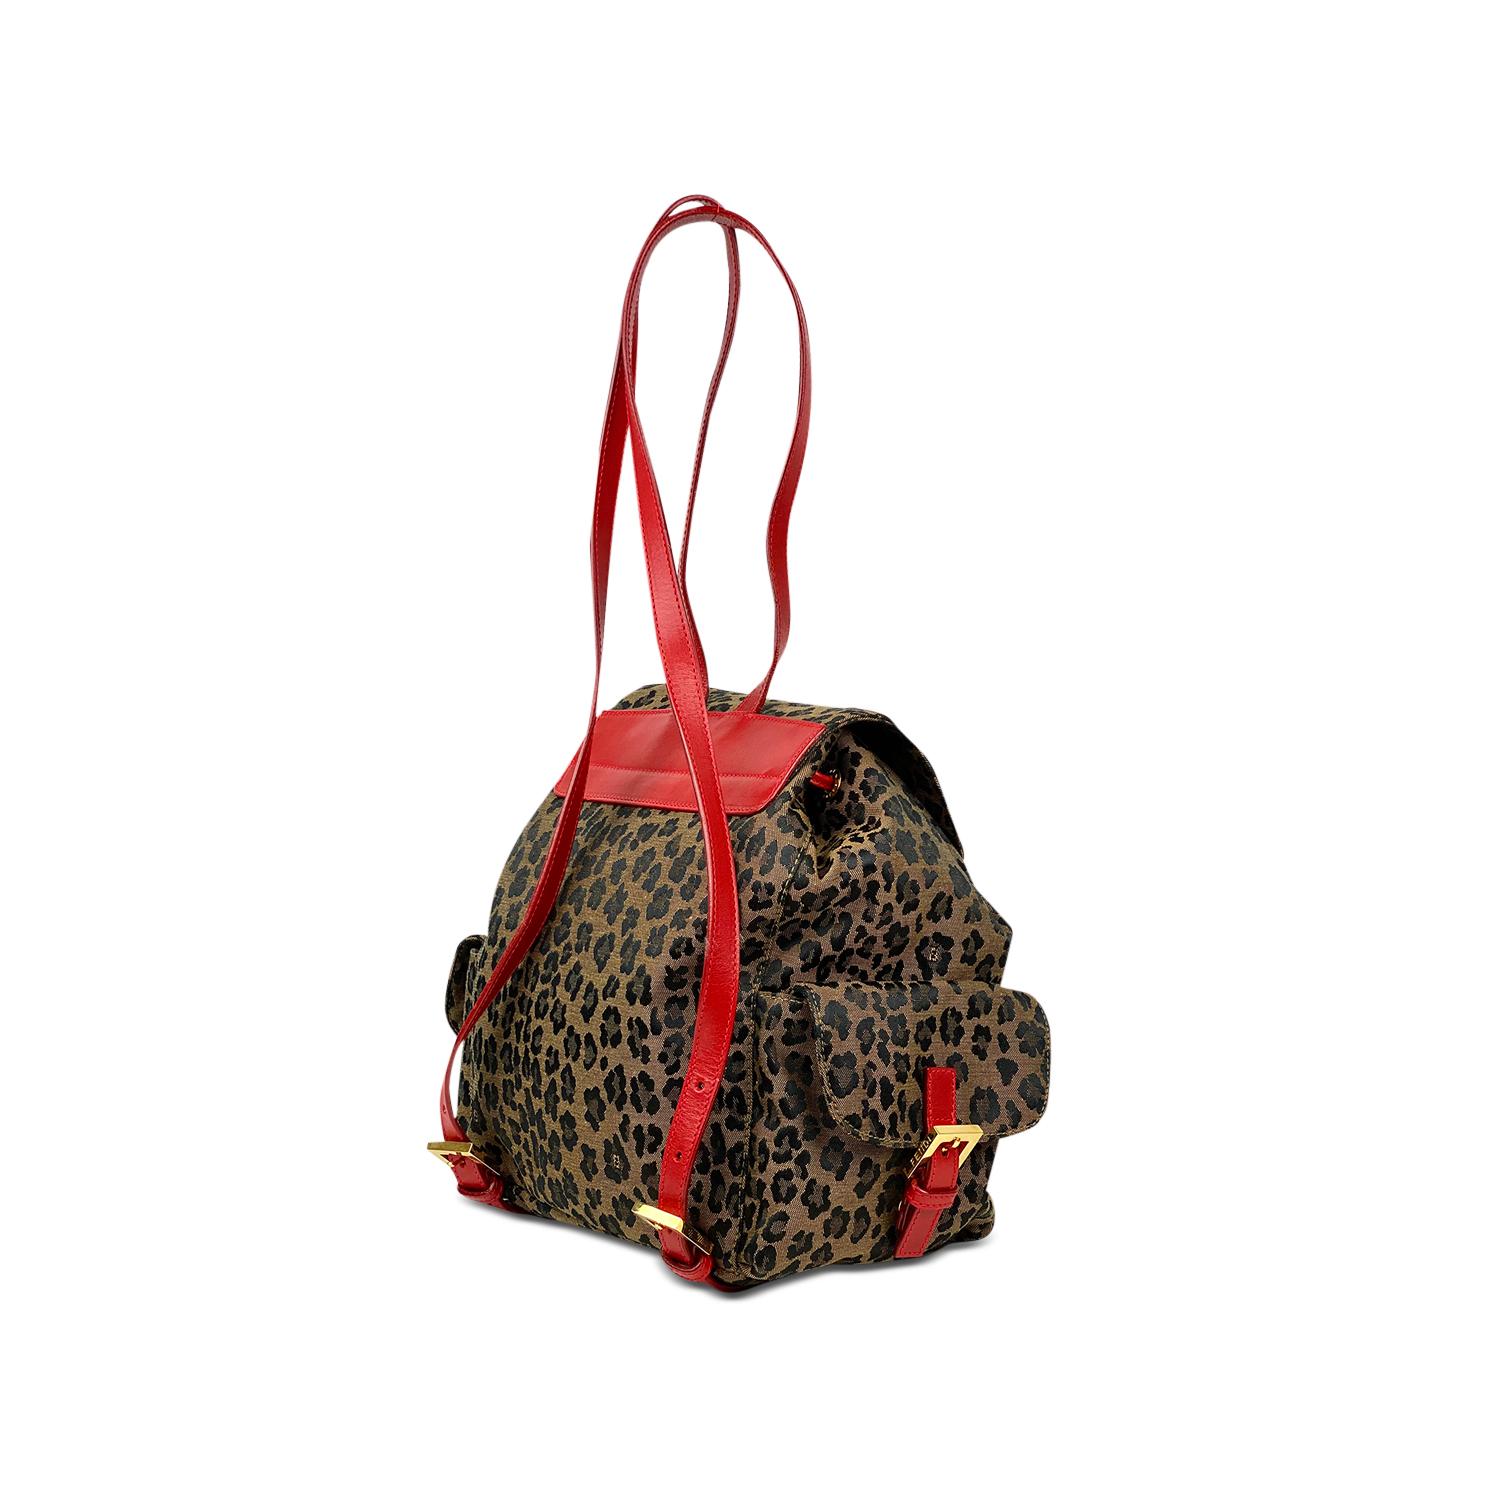 Fendi Leopard Backpack In Excellent Condition For Sale In Sundbyberg, SE